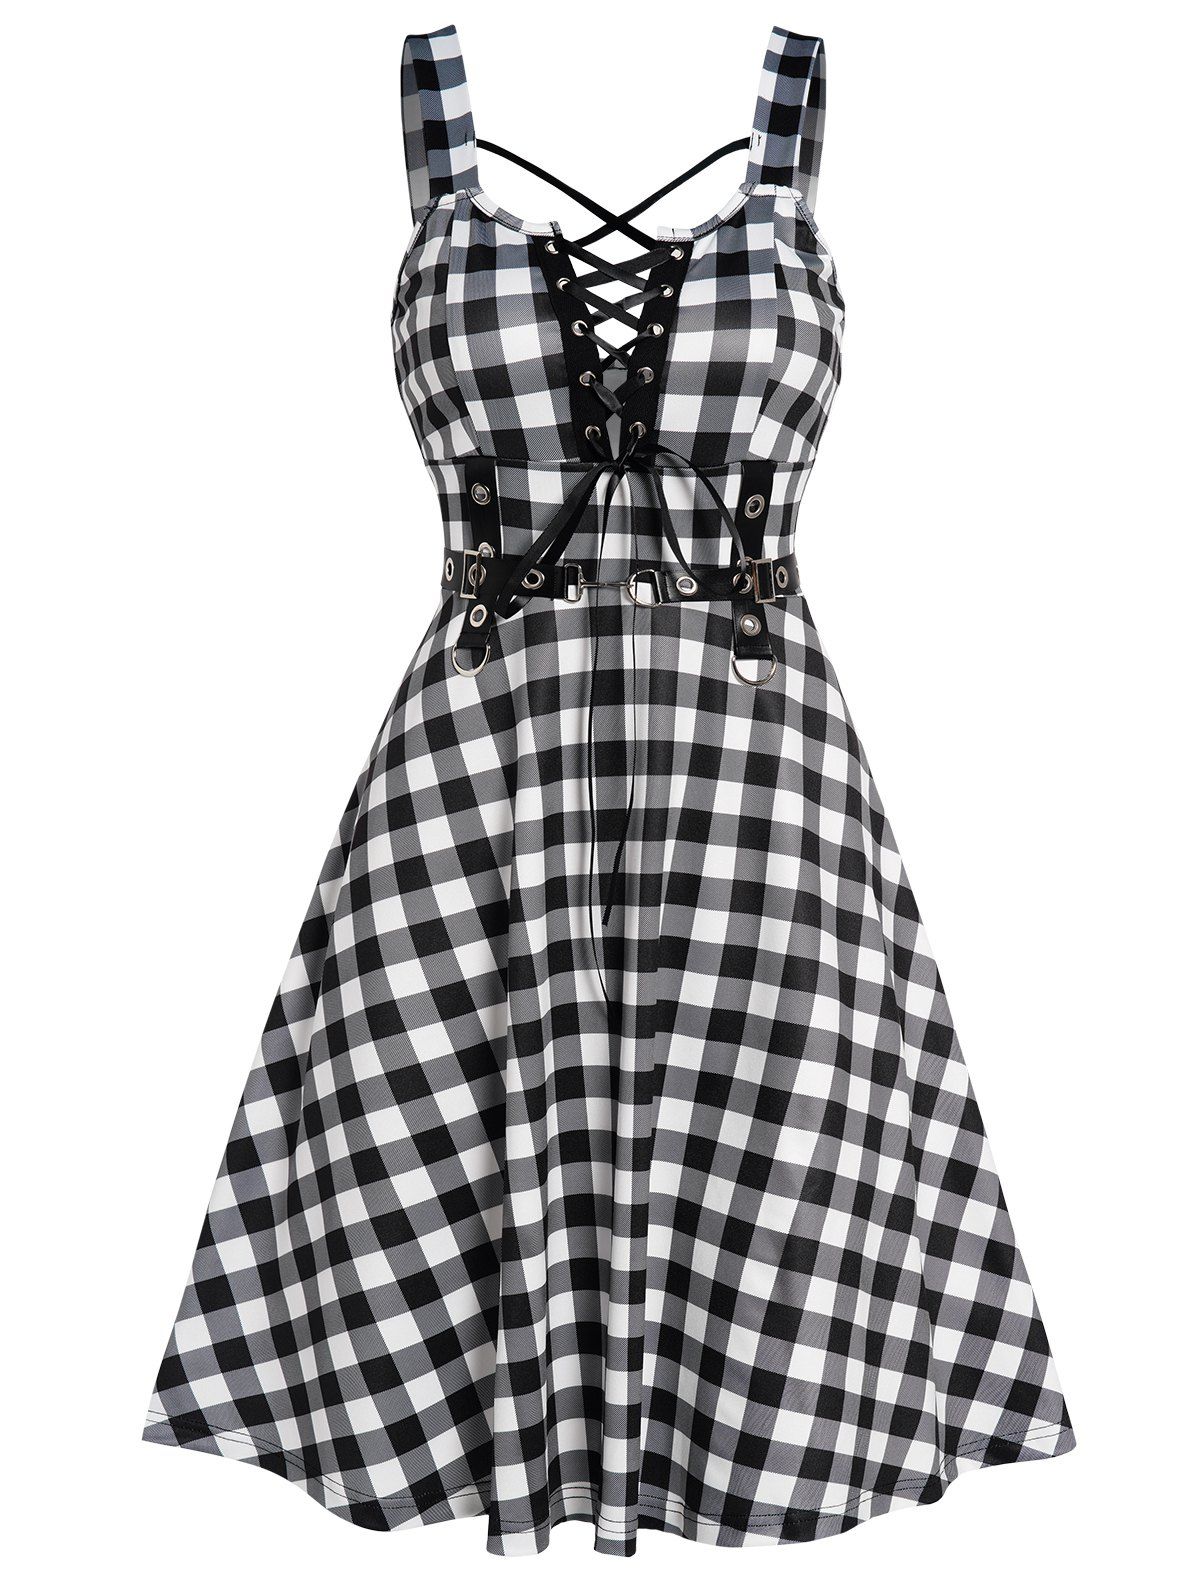 Plaid Print Dress Crisscross Lace Up Grommet High Waisted Sleeveless A Line Mini Dress - BLACK M